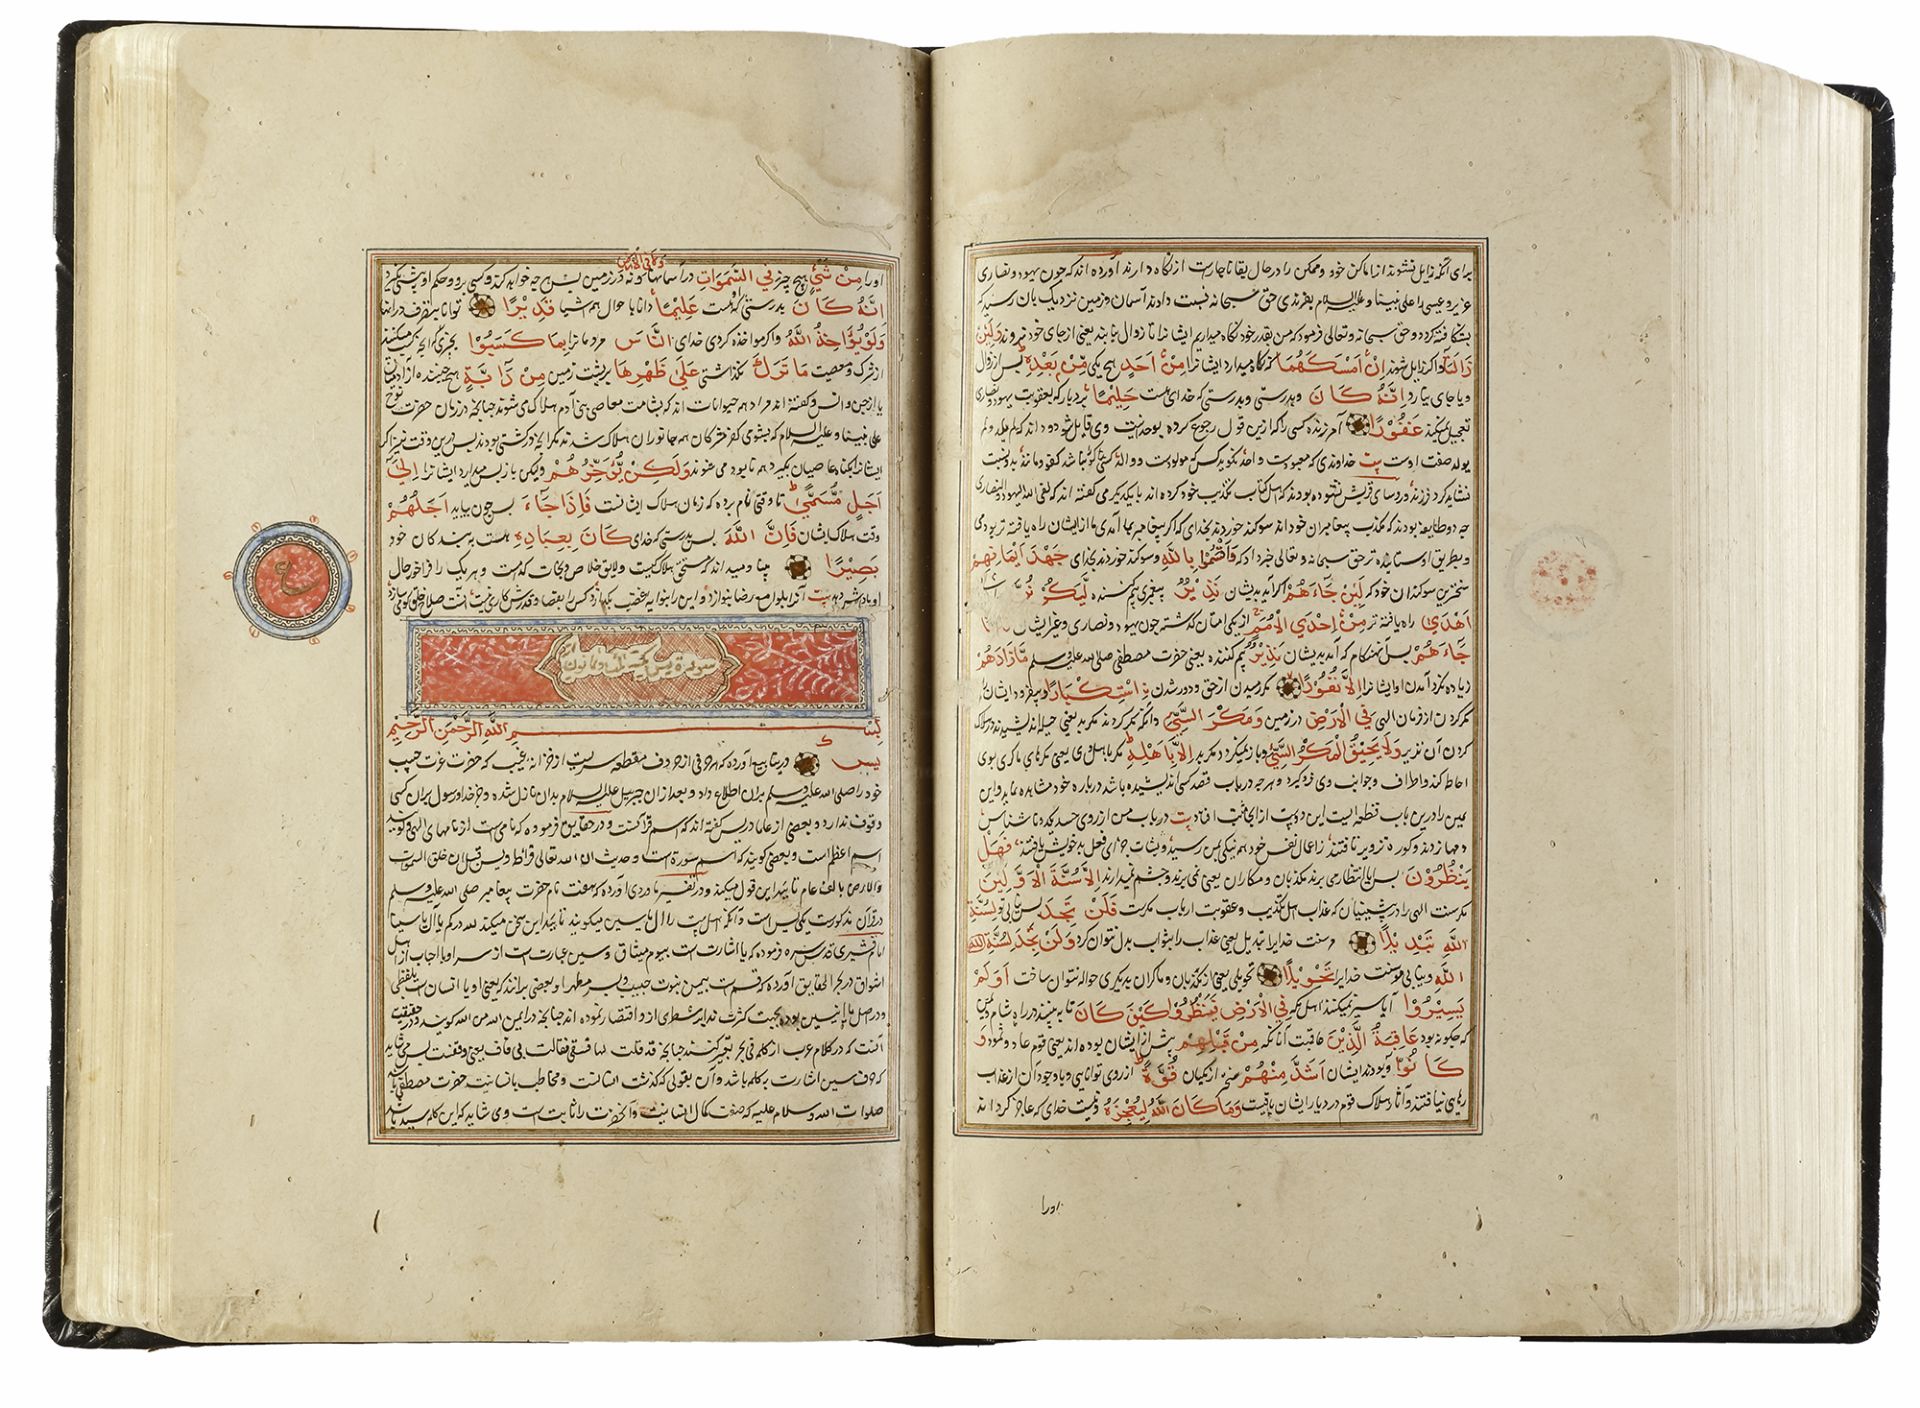 JAWAHER AL-TAFISR LE TOHFAT AL-AMIR BY HUSAIN KASHEFI, SULTANATE INDIA, 897 AH/149 AD - Image 5 of 11